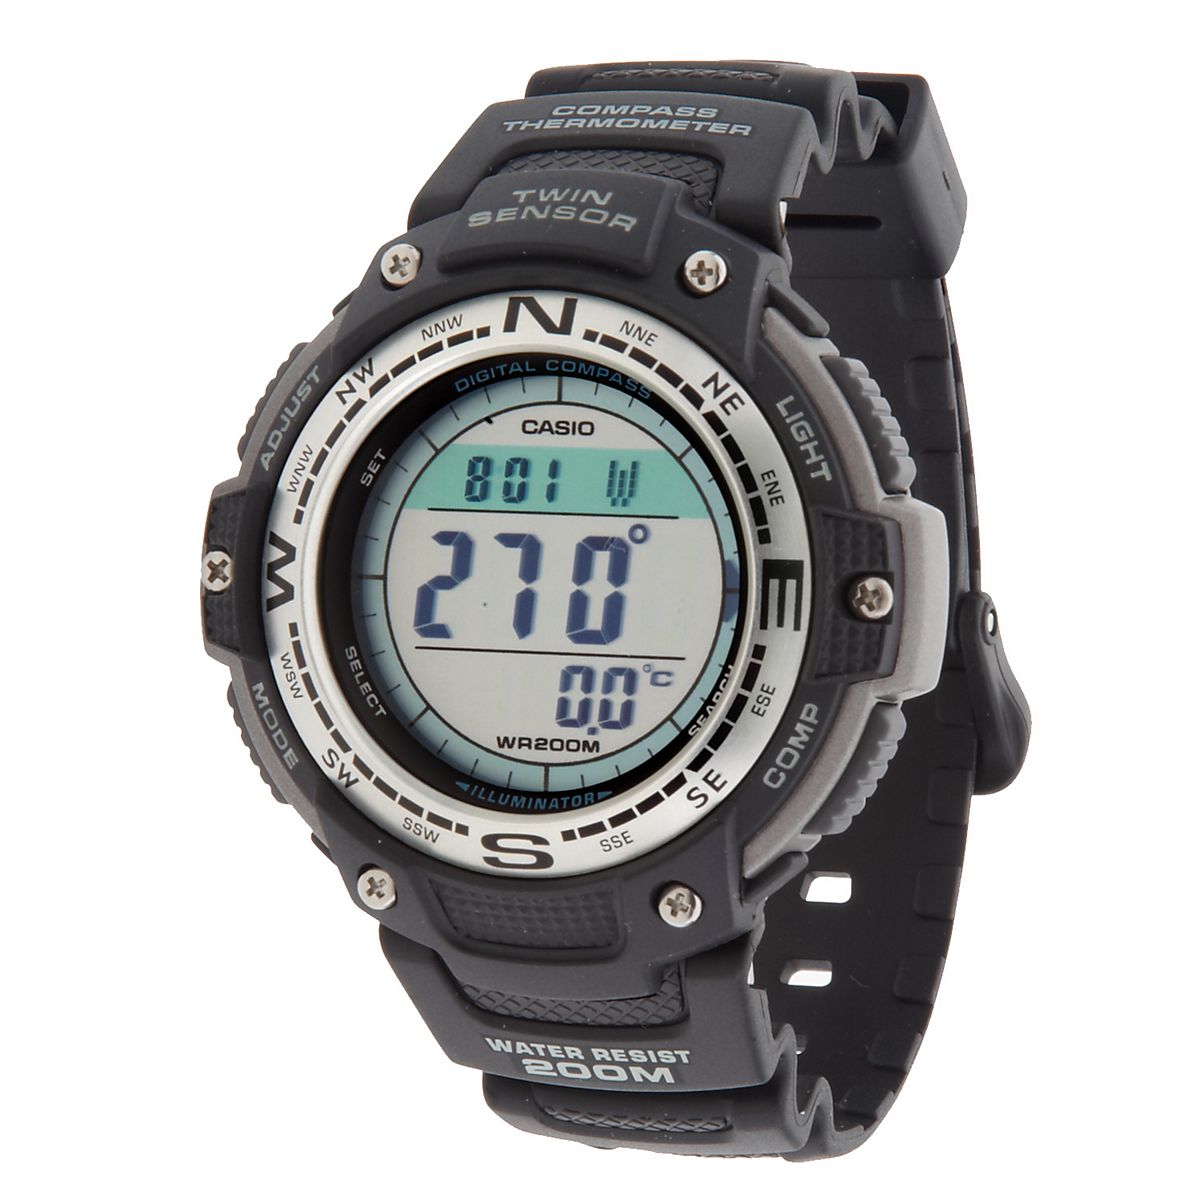 Casio Men's Digital Compass Twin Sensor Watch | Academy